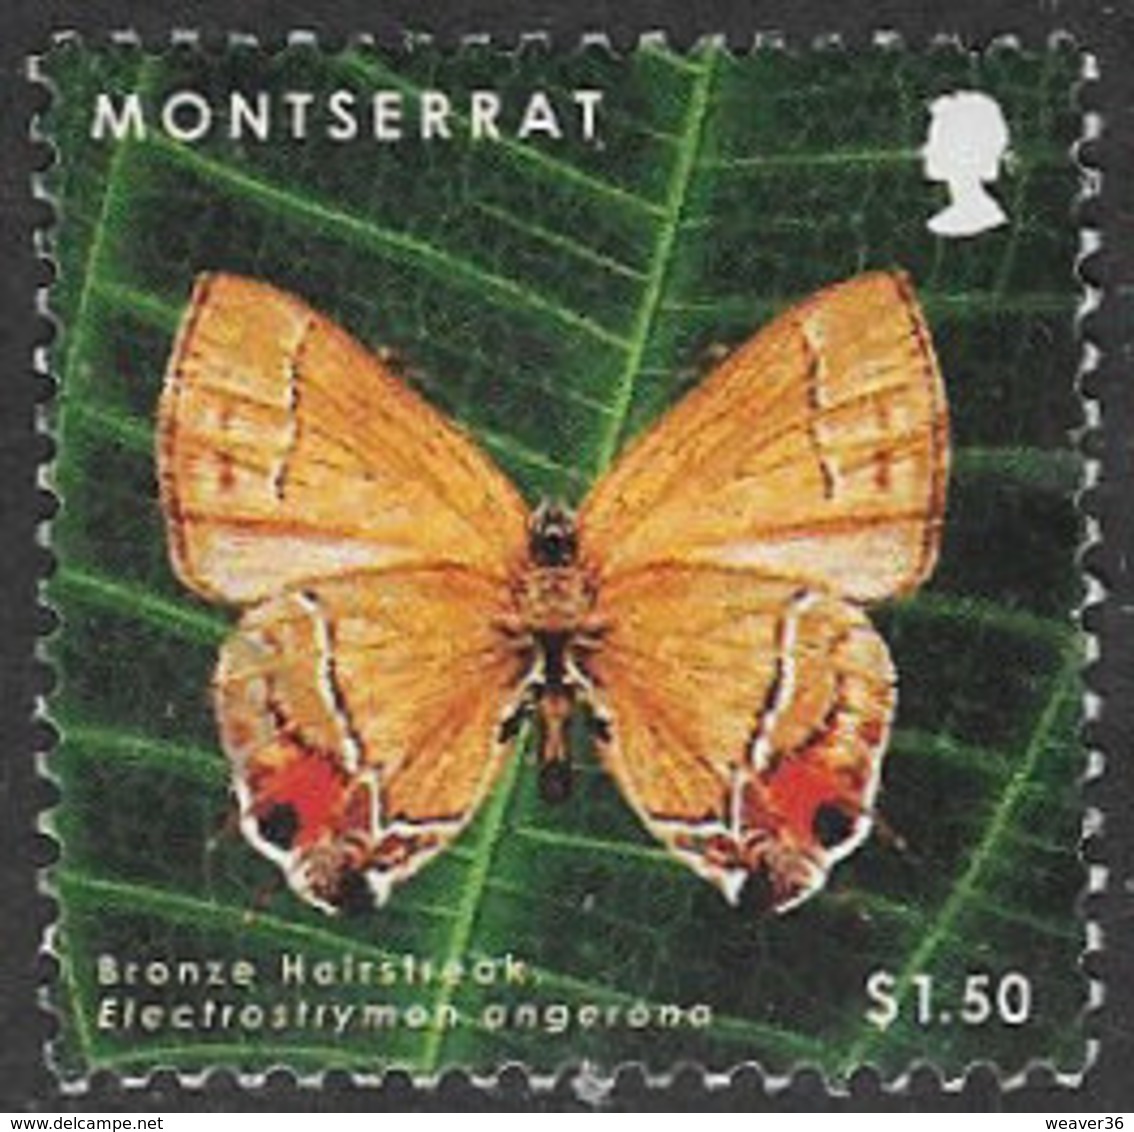 Montserrat 2012 Definitive $1.50 Good/fine Used [38/31700/ND] - Montserrat